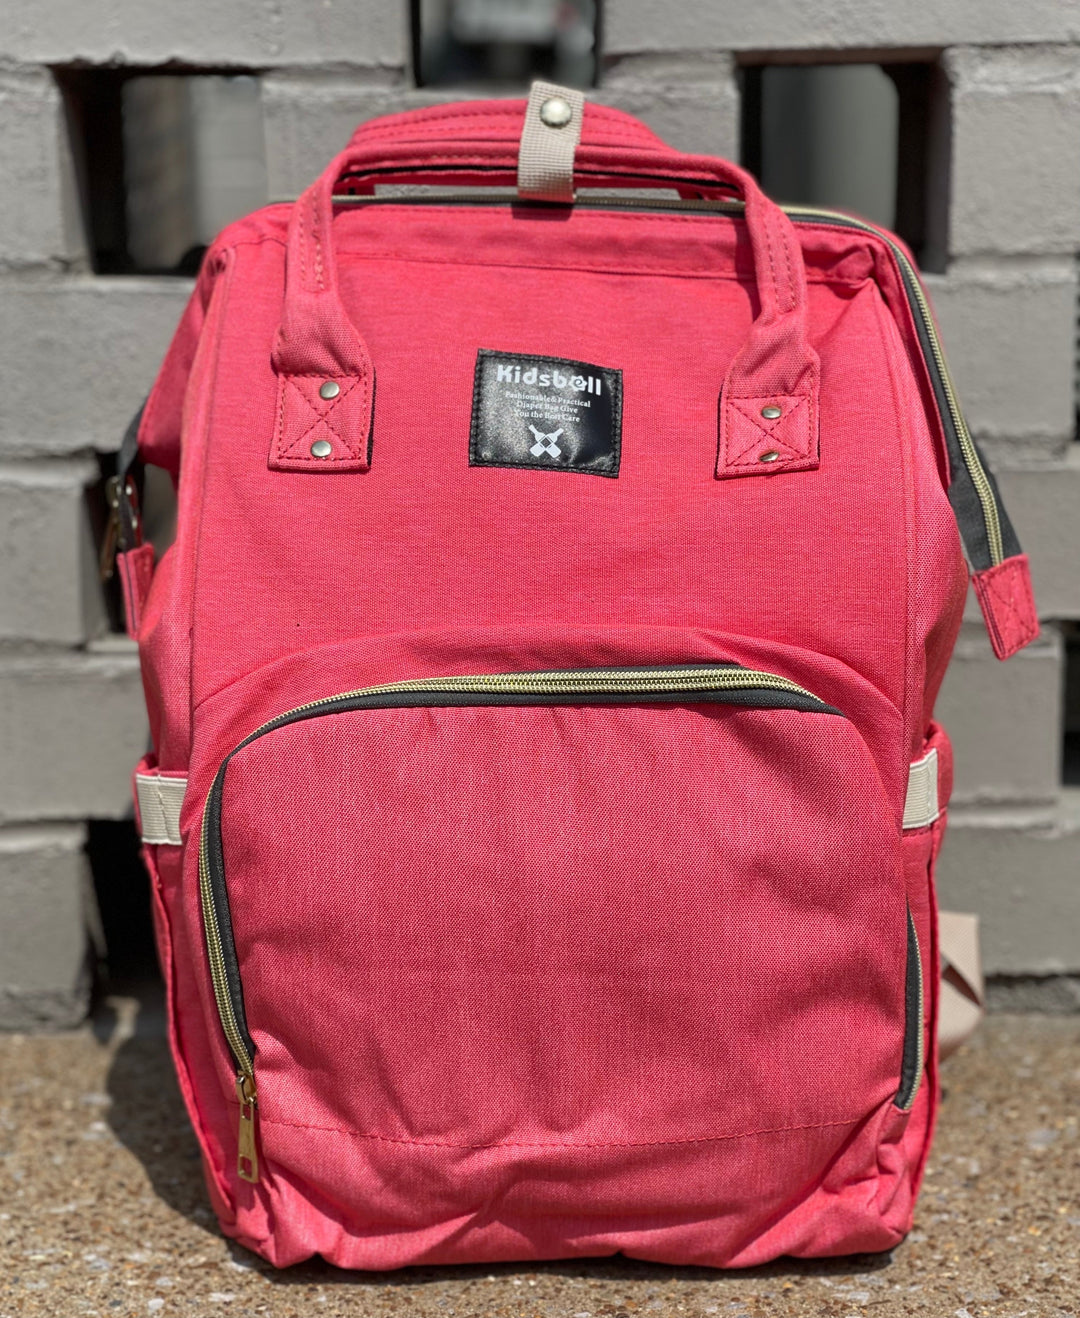 Diaper Bag Backpack - Premium Just for baby from Pat's Monograms - Just $29.95! Shop now at Pat's Monograms